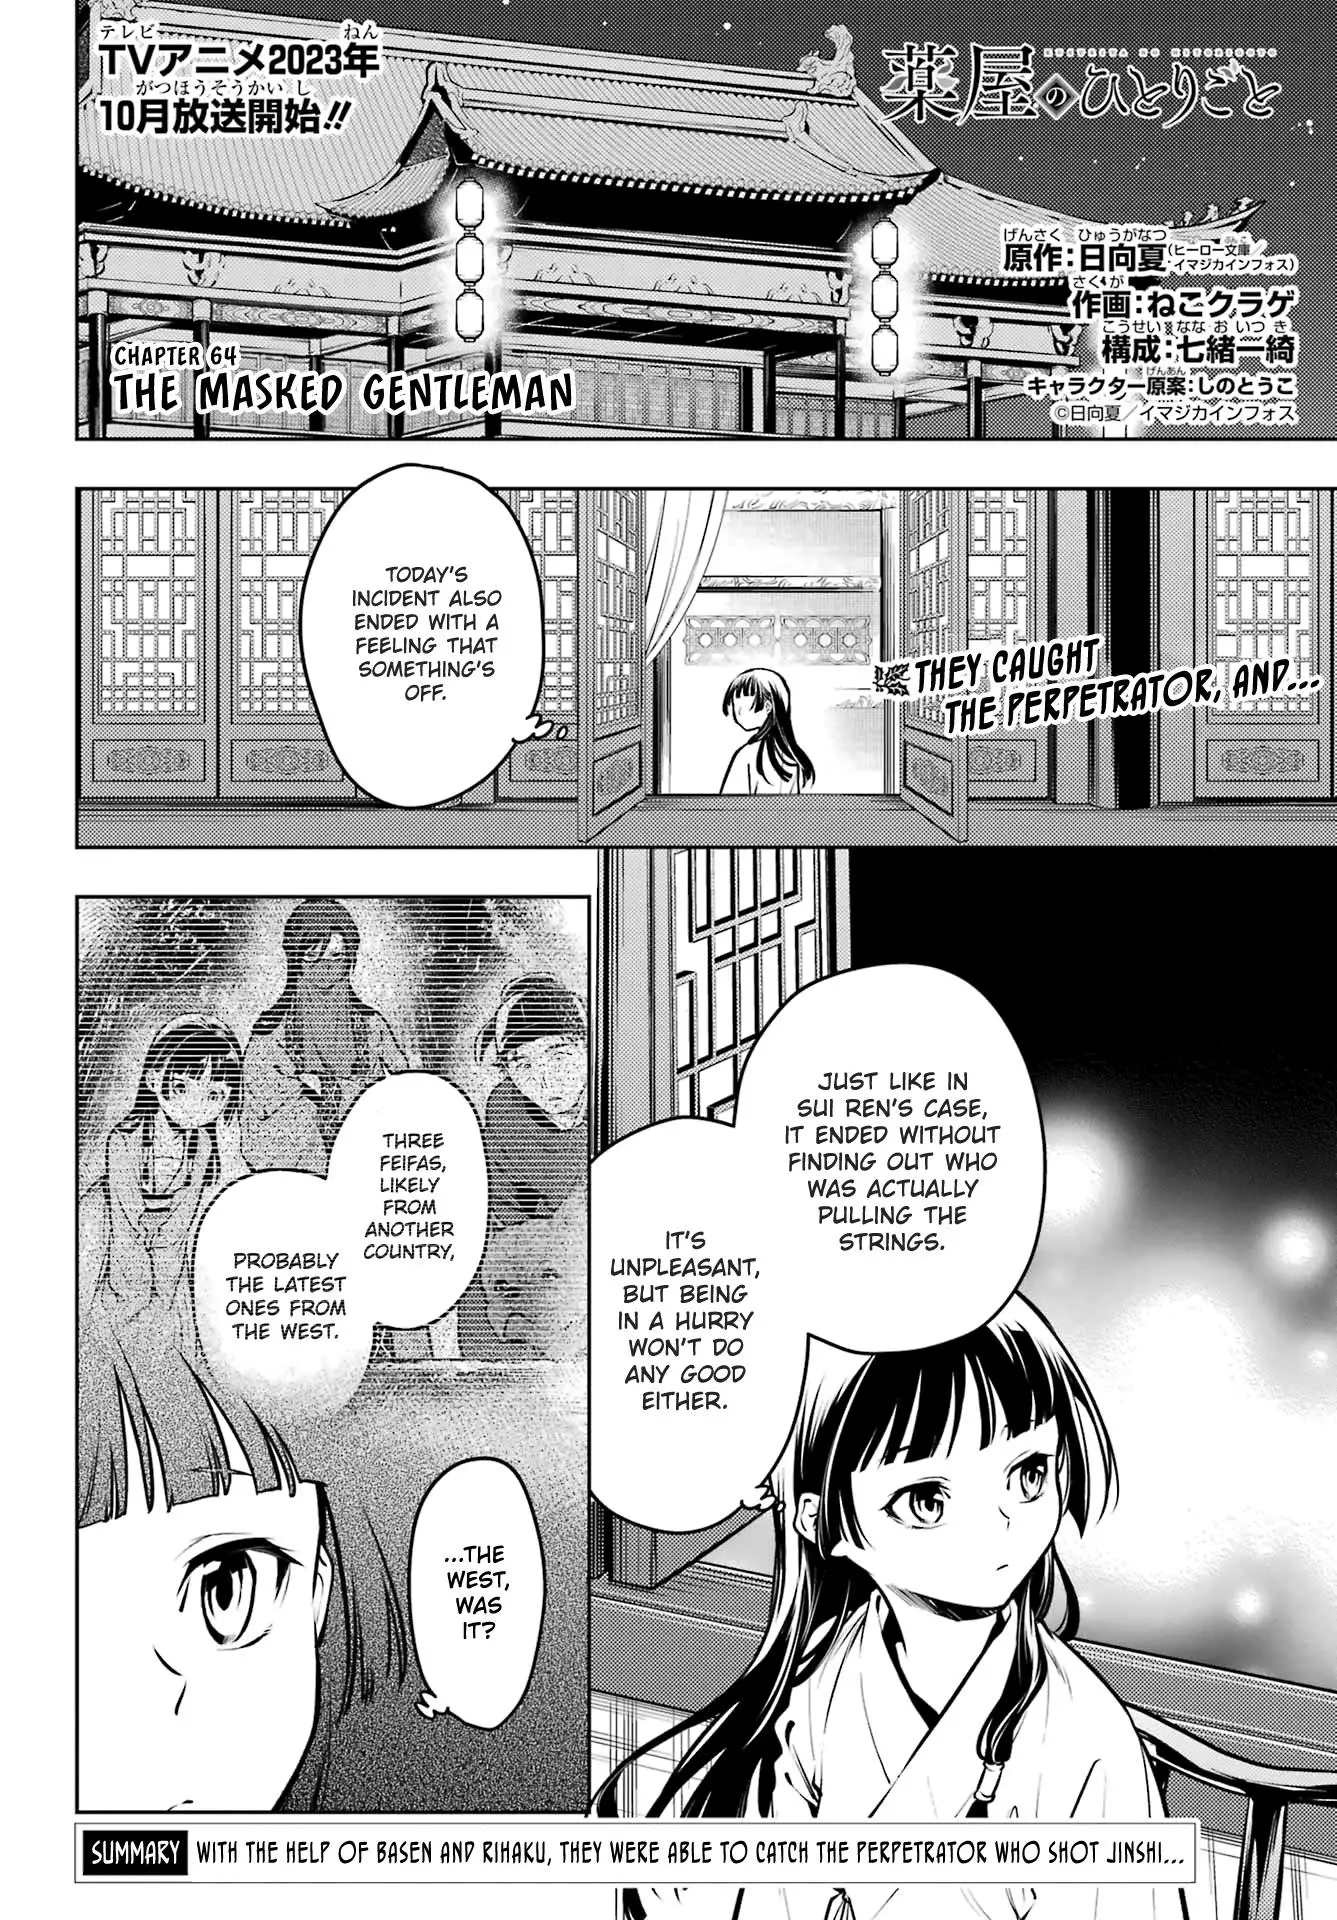 Kusuriya no Hitorigoto - 64 page 1-8fc97d23